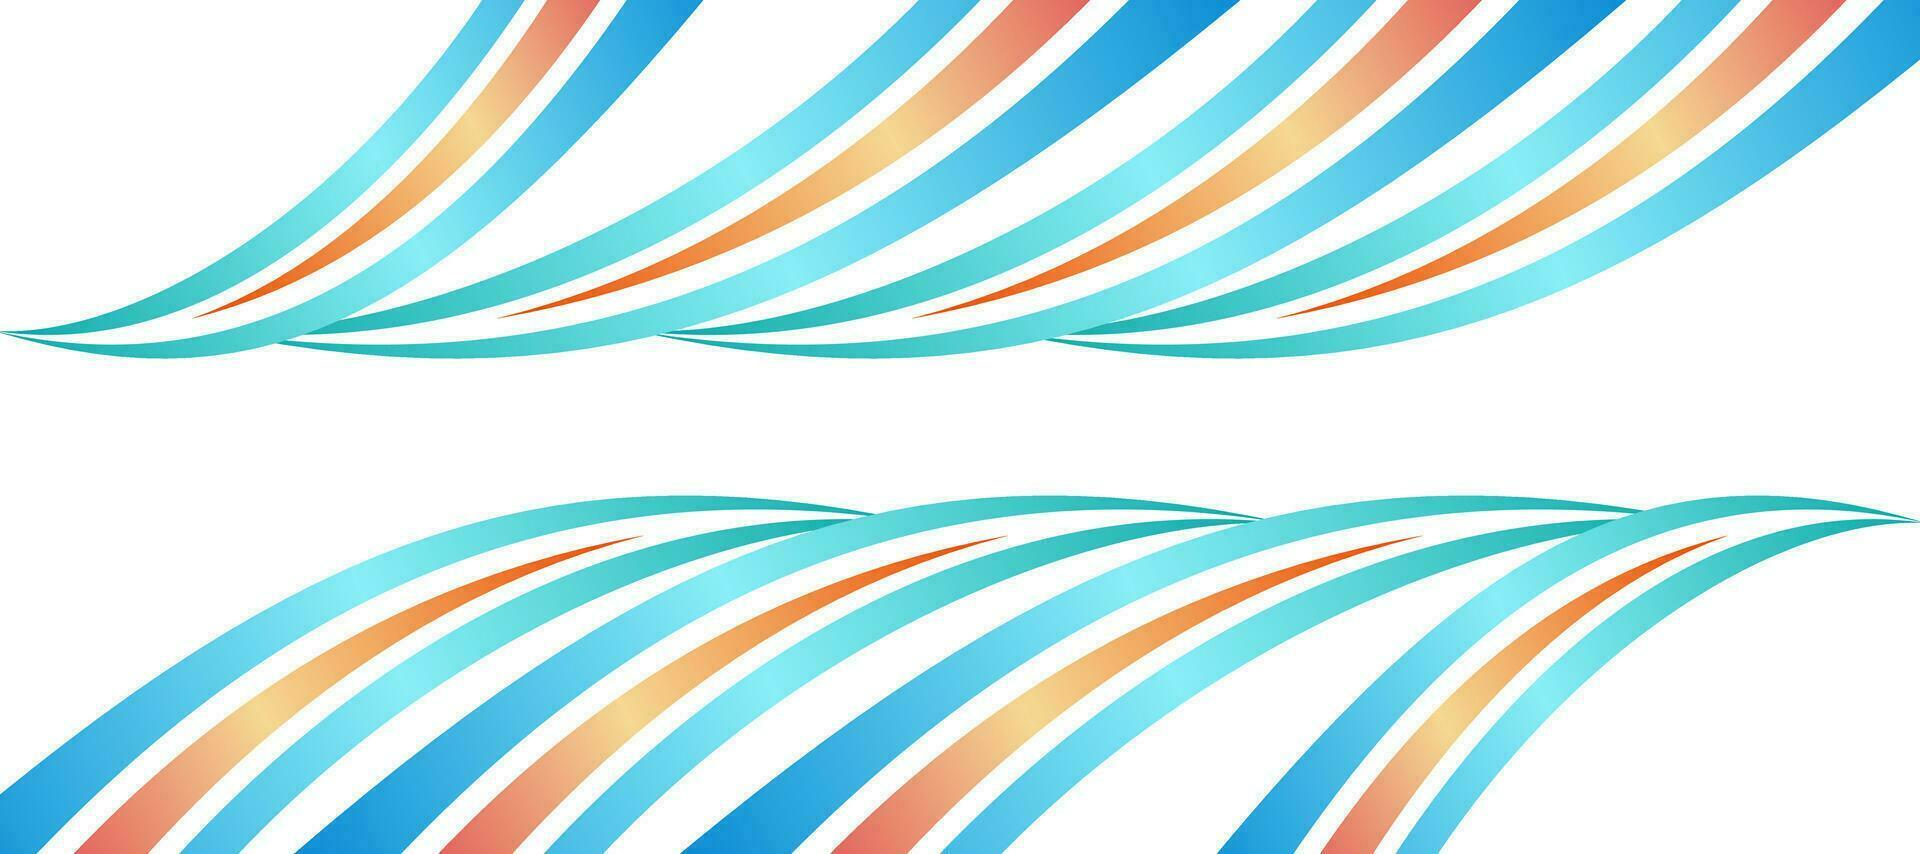 abstract blauw kolken curves golven sticker voor auto inpakken kleurstelling achtergrond vector